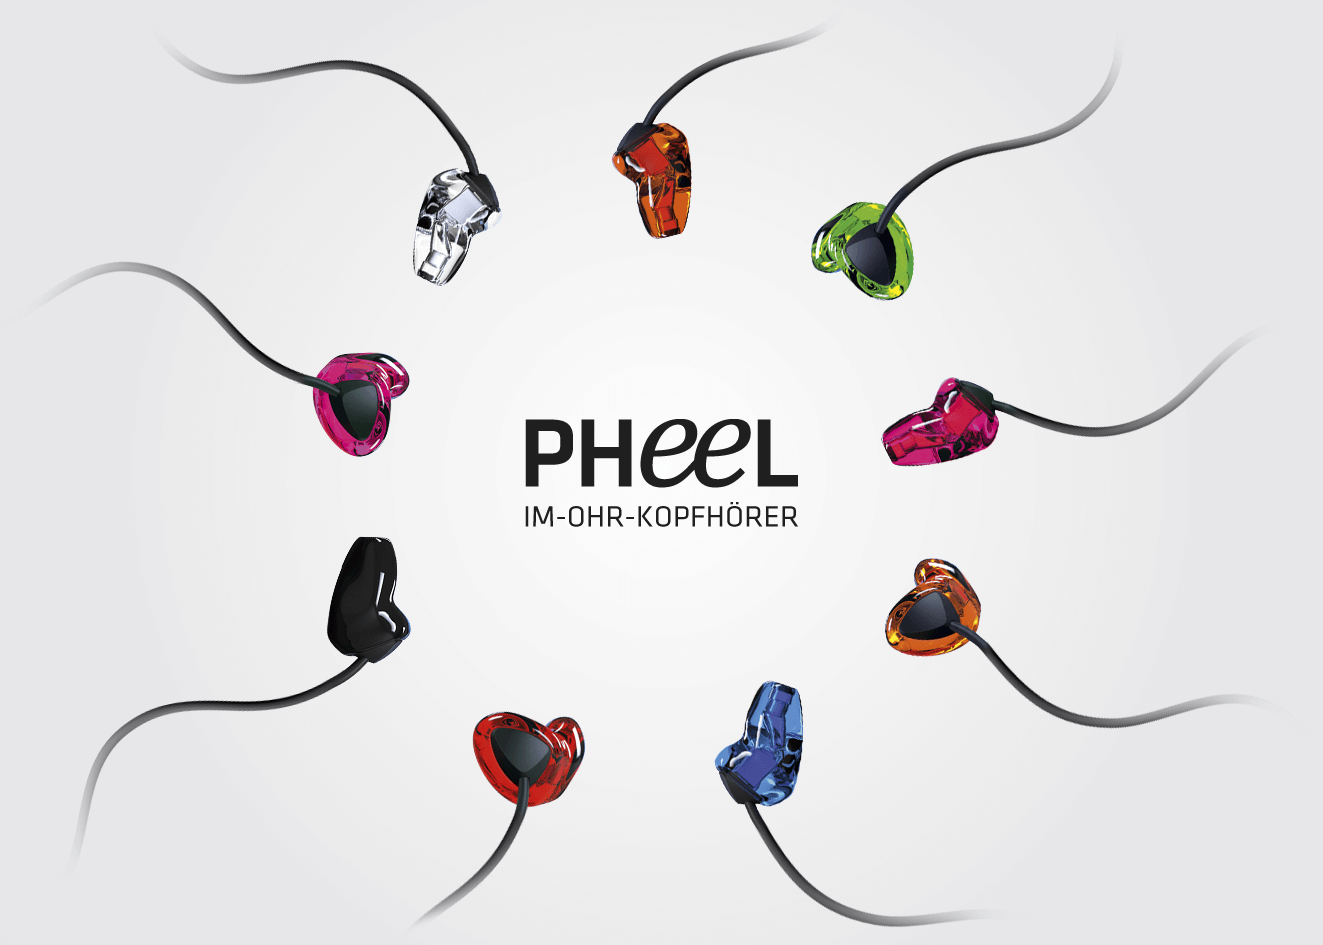 Pheel - In-Ear-Kopfhörer